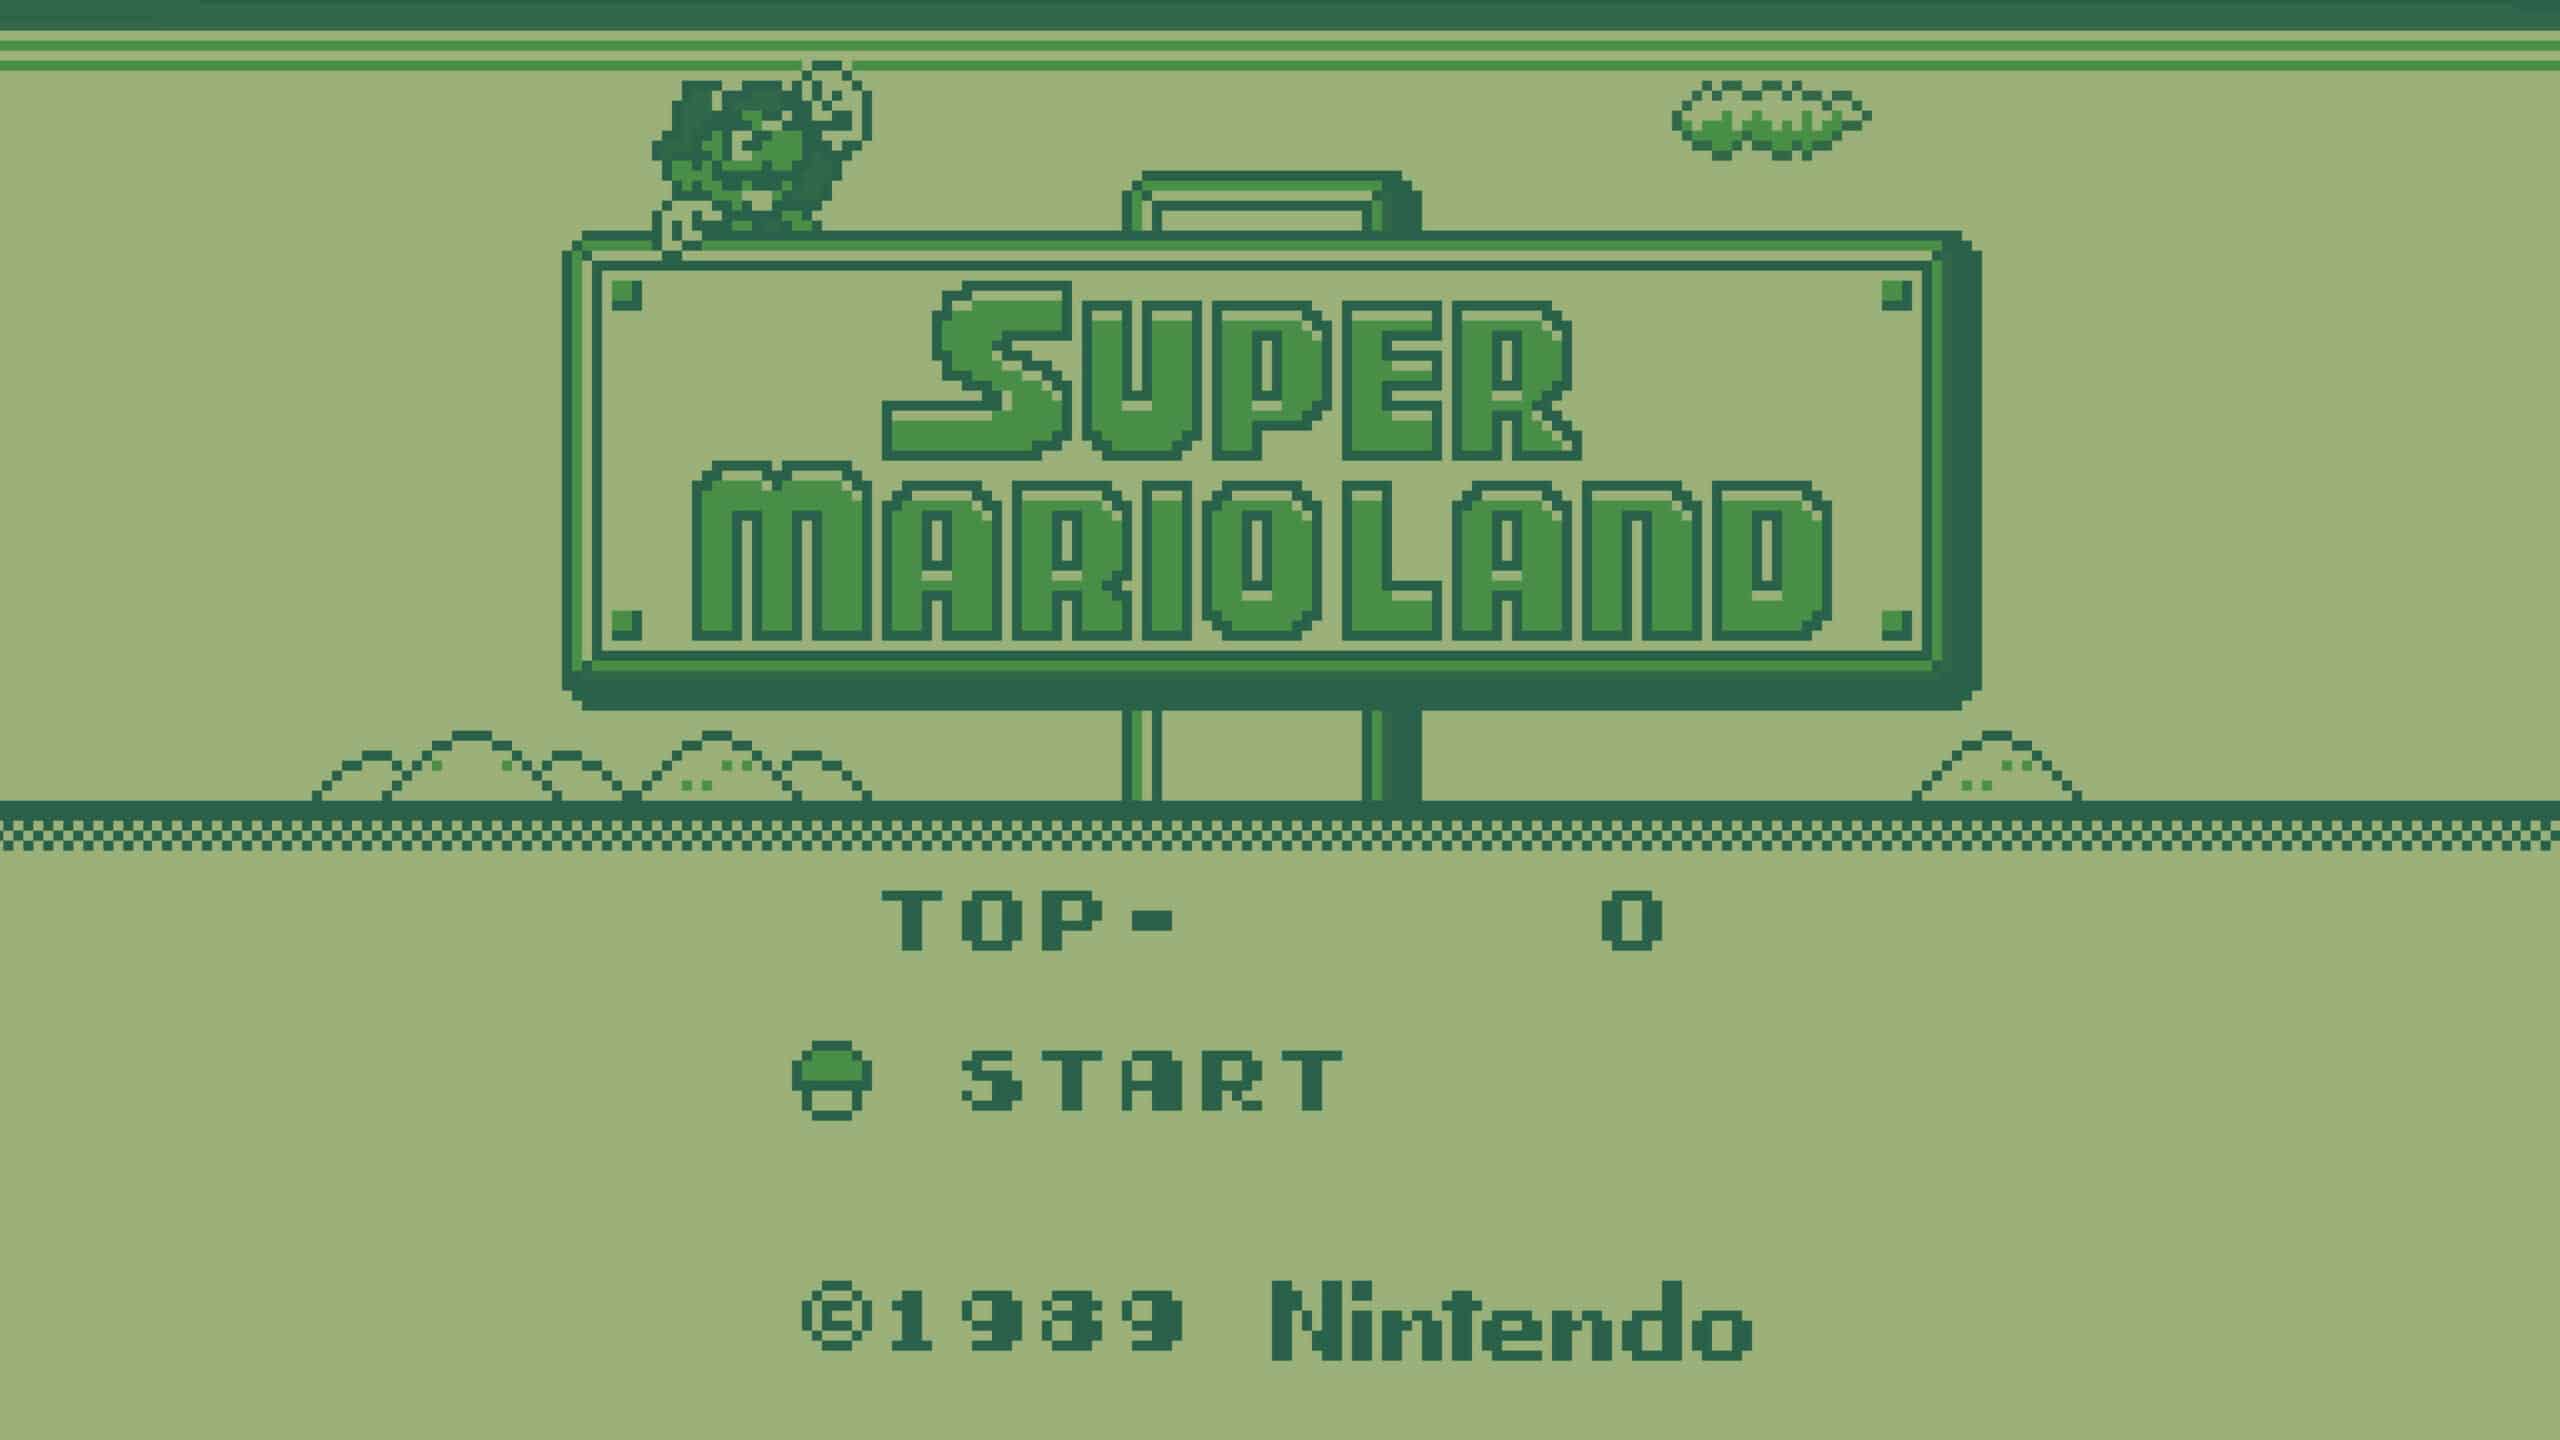 Super-Mario-Land-Game-Boy-Capture d'écran-UHD-4K-Wallpaper-Pixelz.jpg